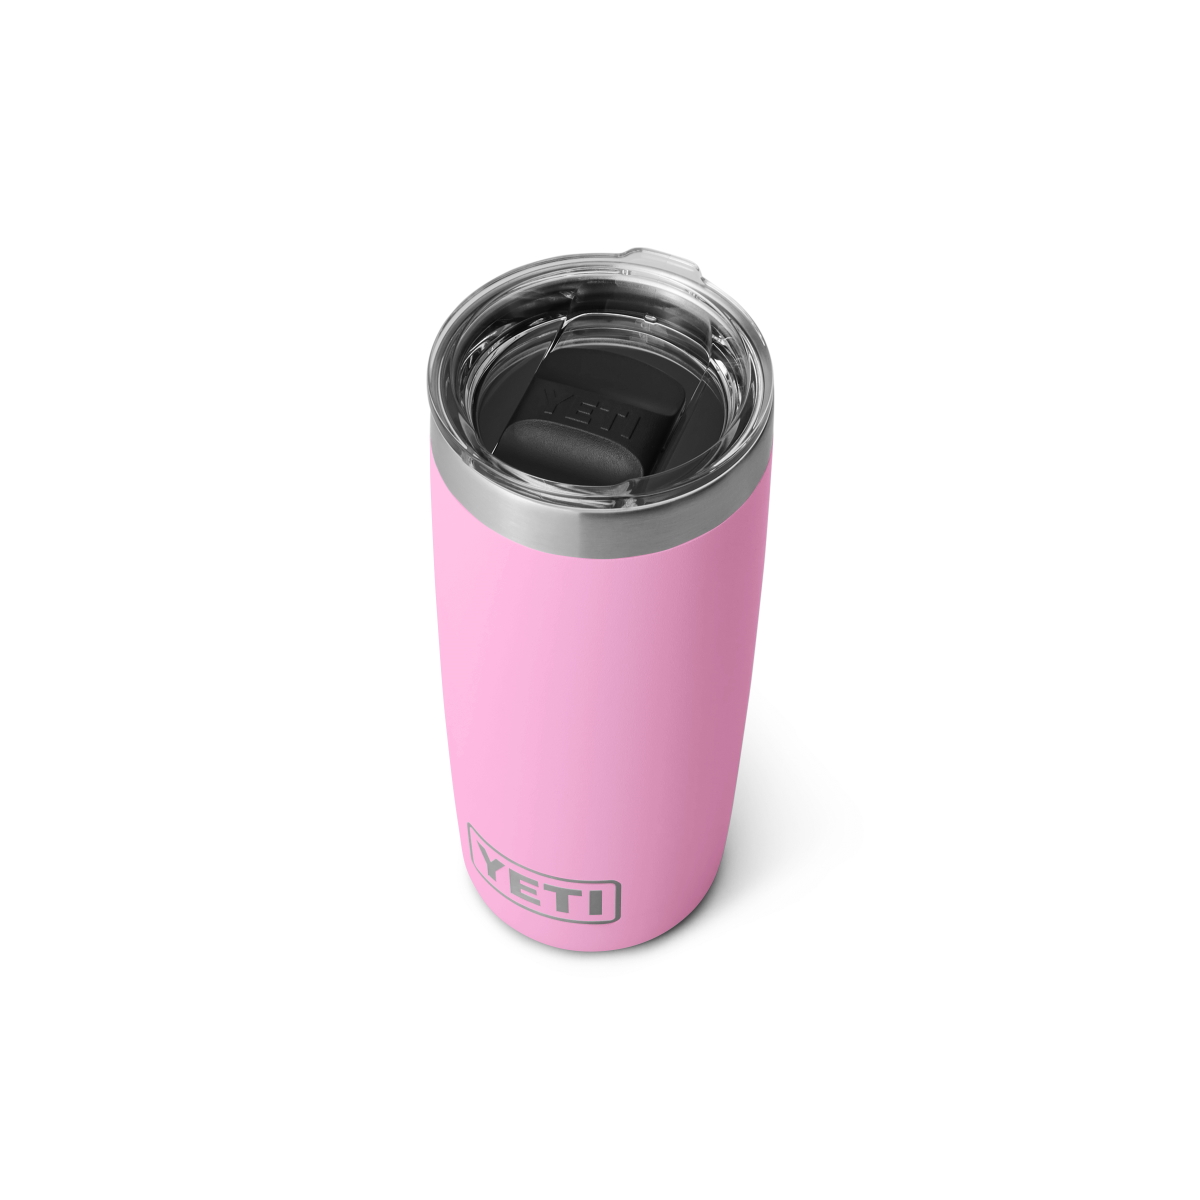 Yeti Rambler 10 oz Lowball with Magslider Lid - Bimini Pink